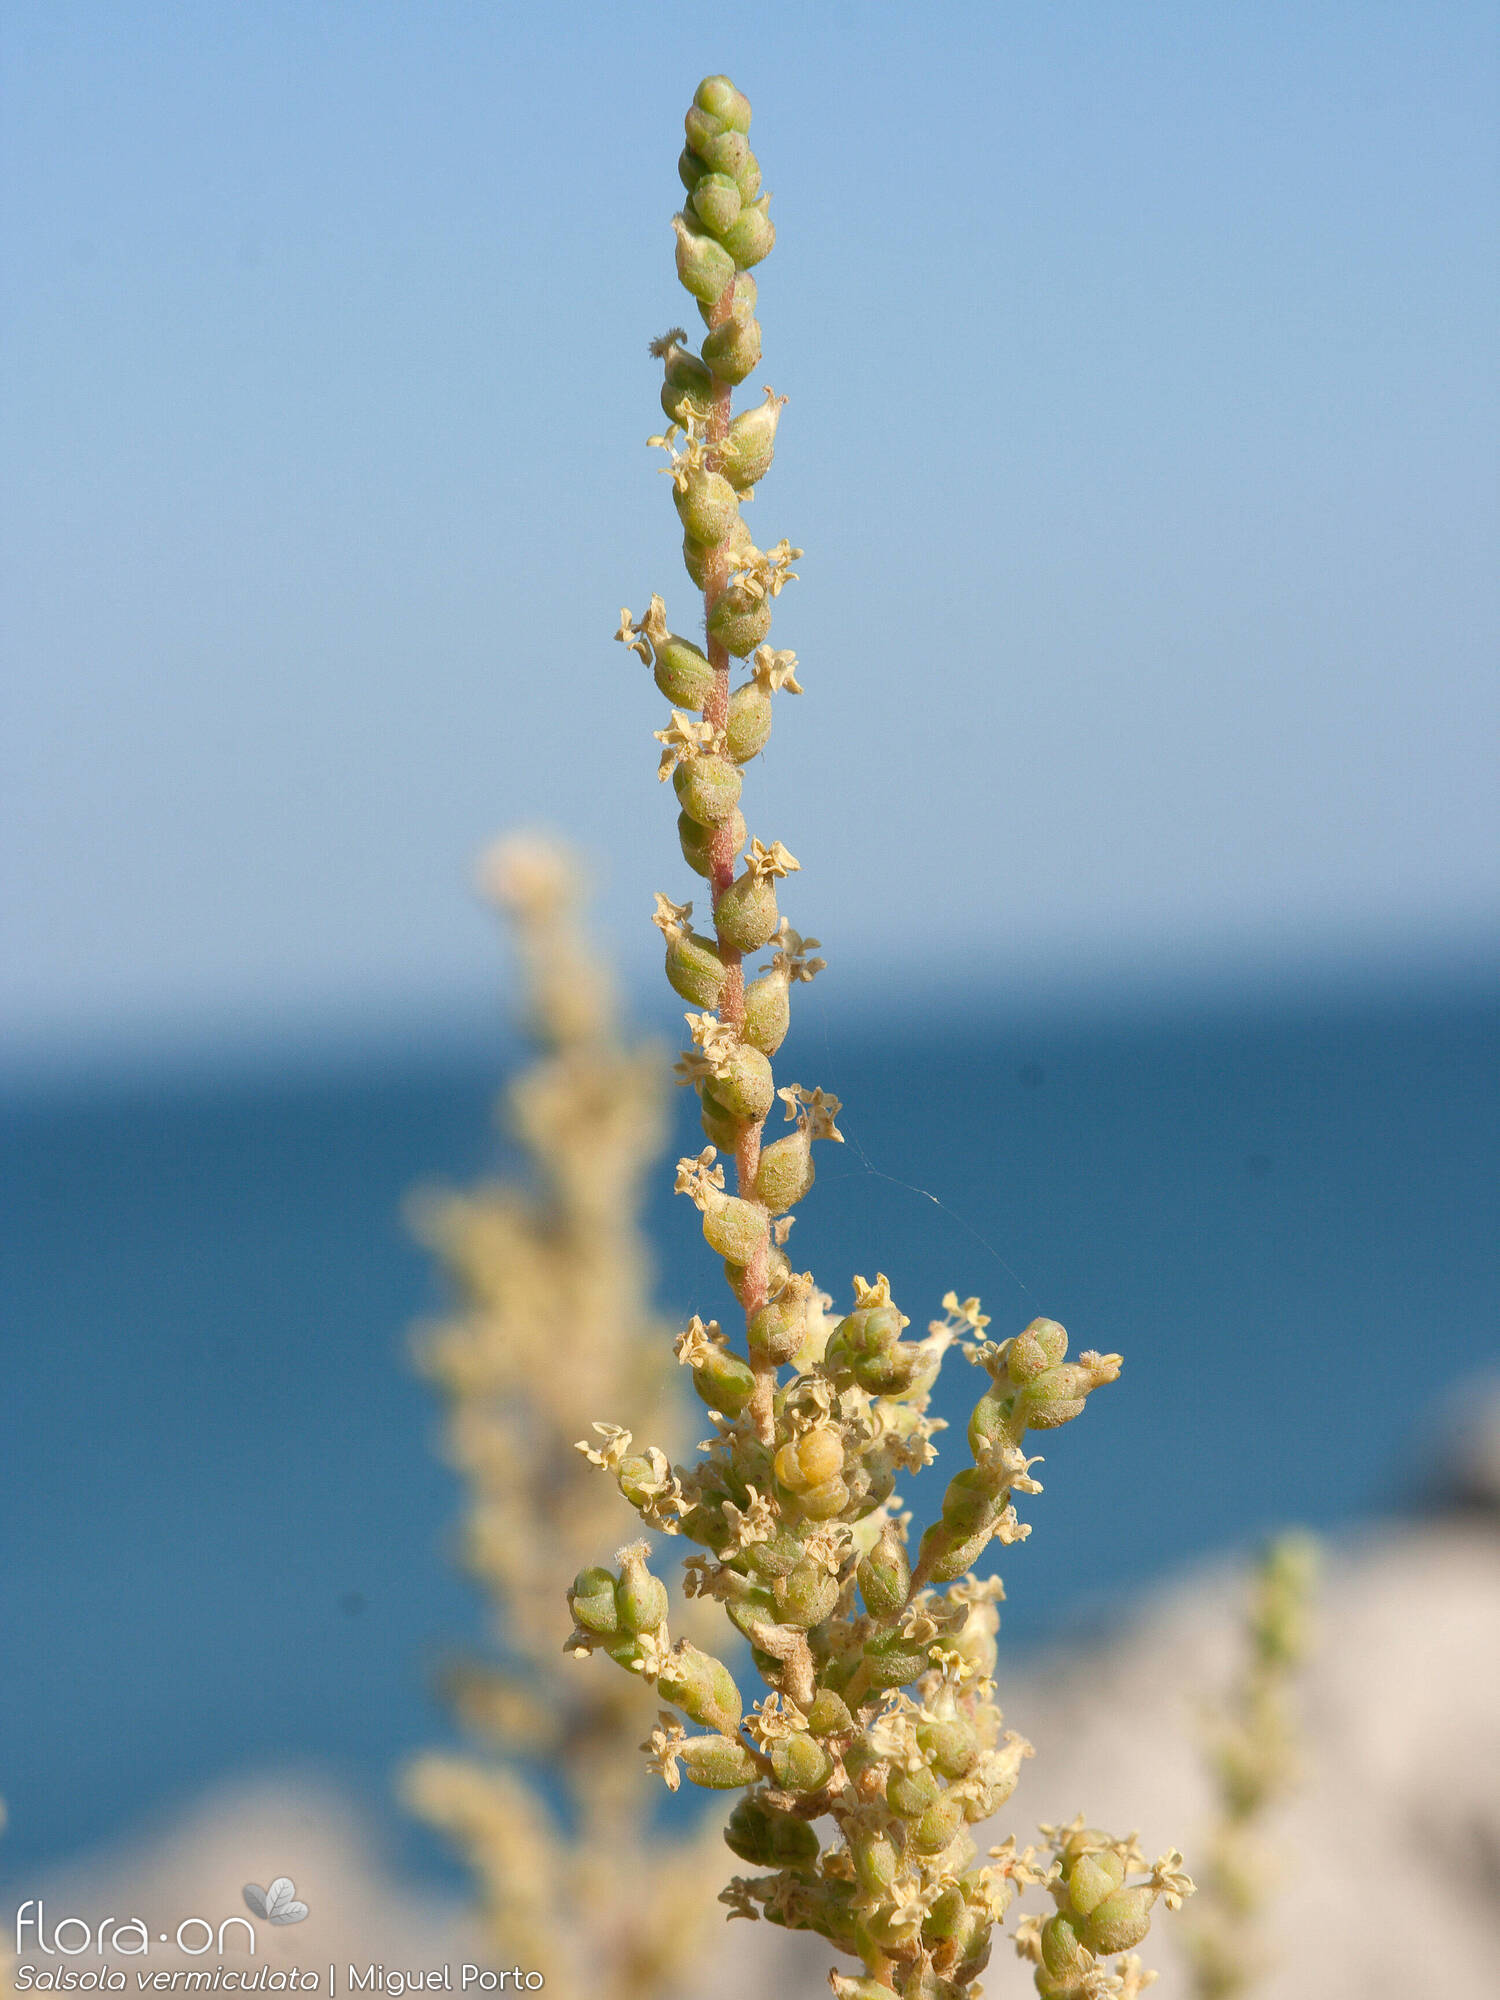 Salsola vermiculata - Flor (geral) | Miguel Porto; CC BY-NC 4.0